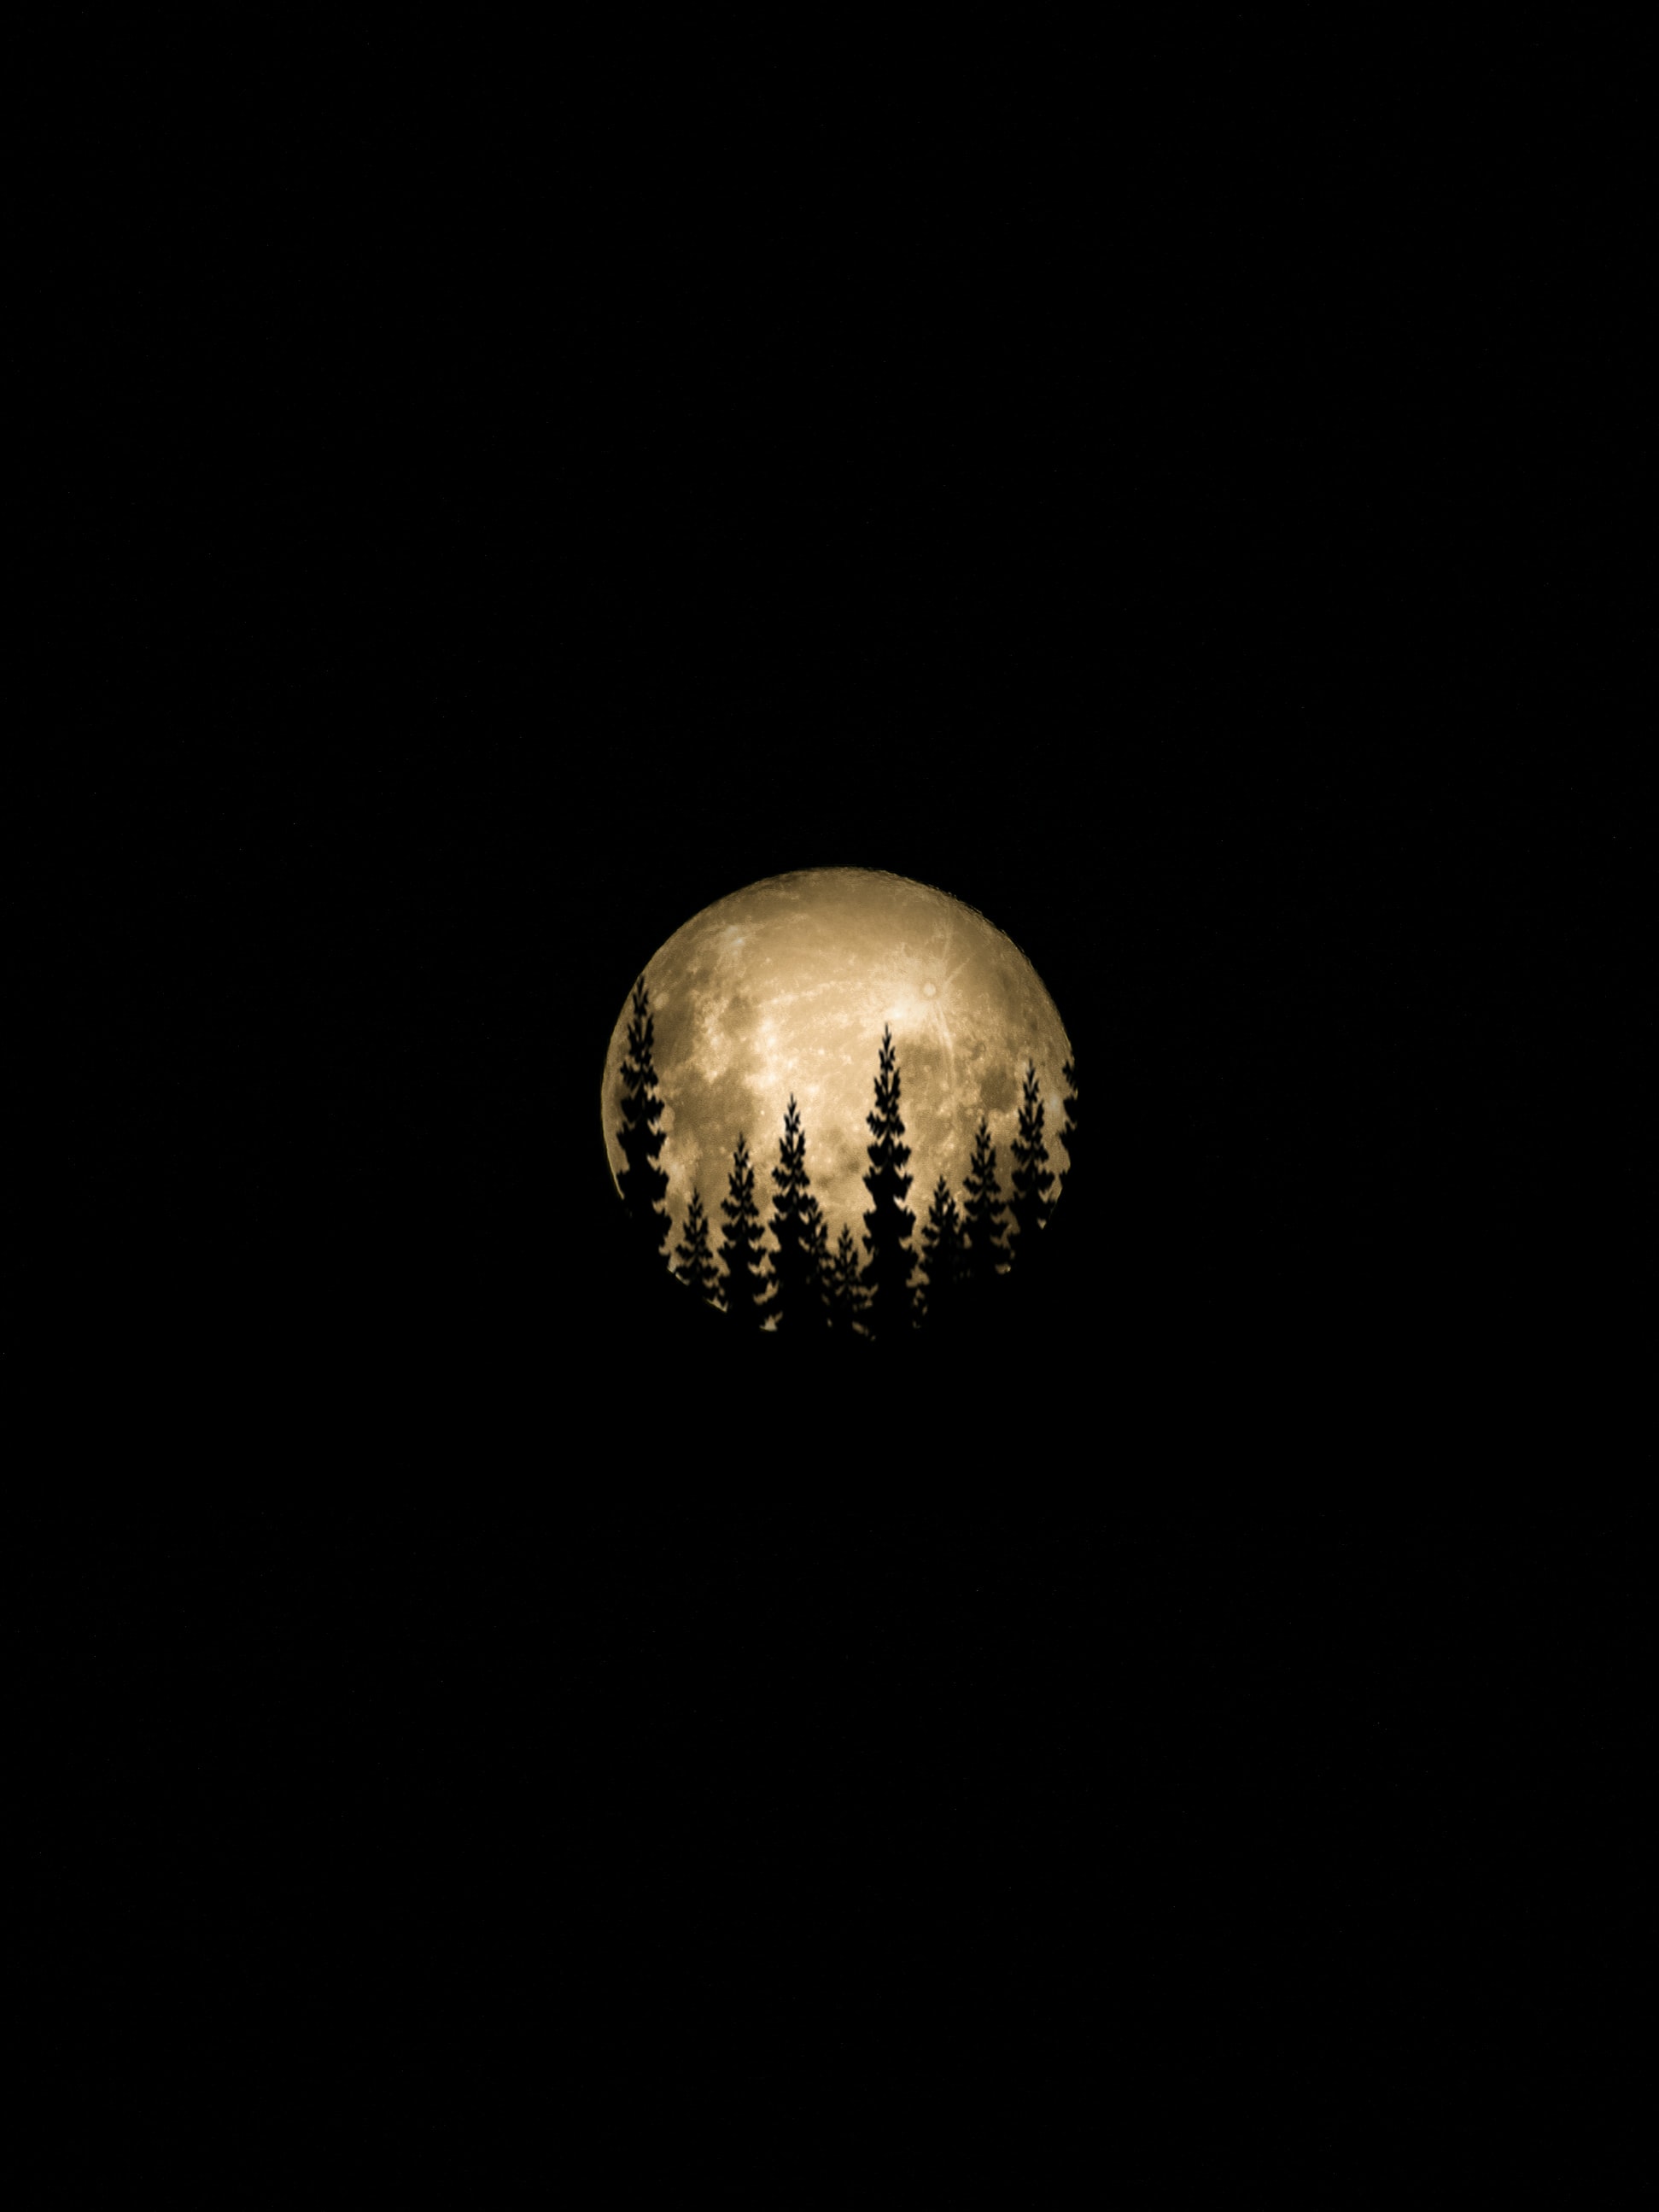 Best Full Moon Desktop Images